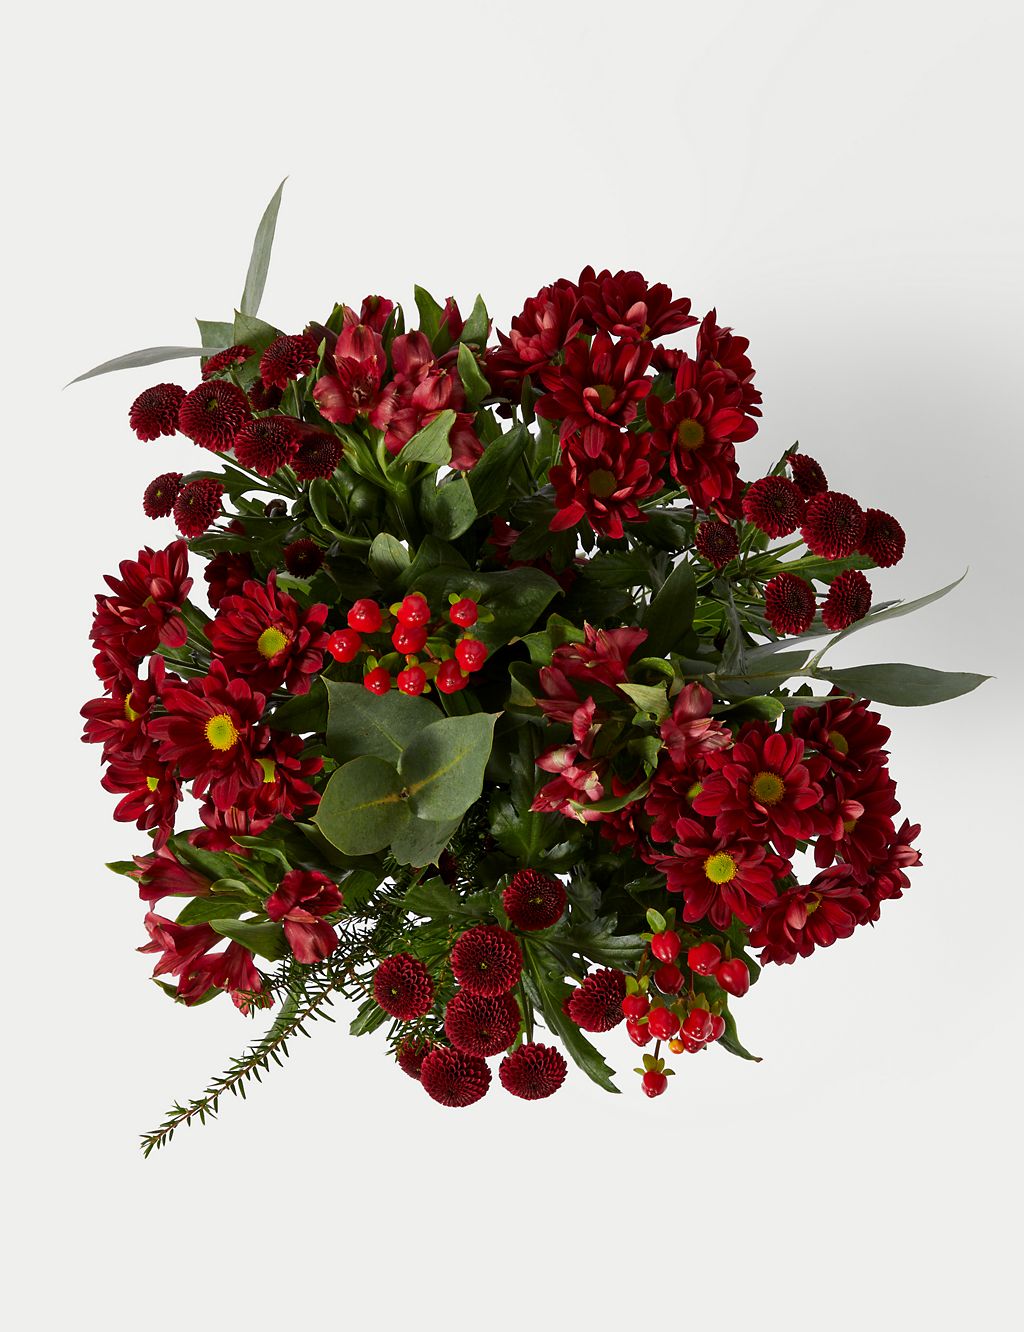 Festive Red Chrysanthemum & Alstroemeria Bouquet 1 of 5